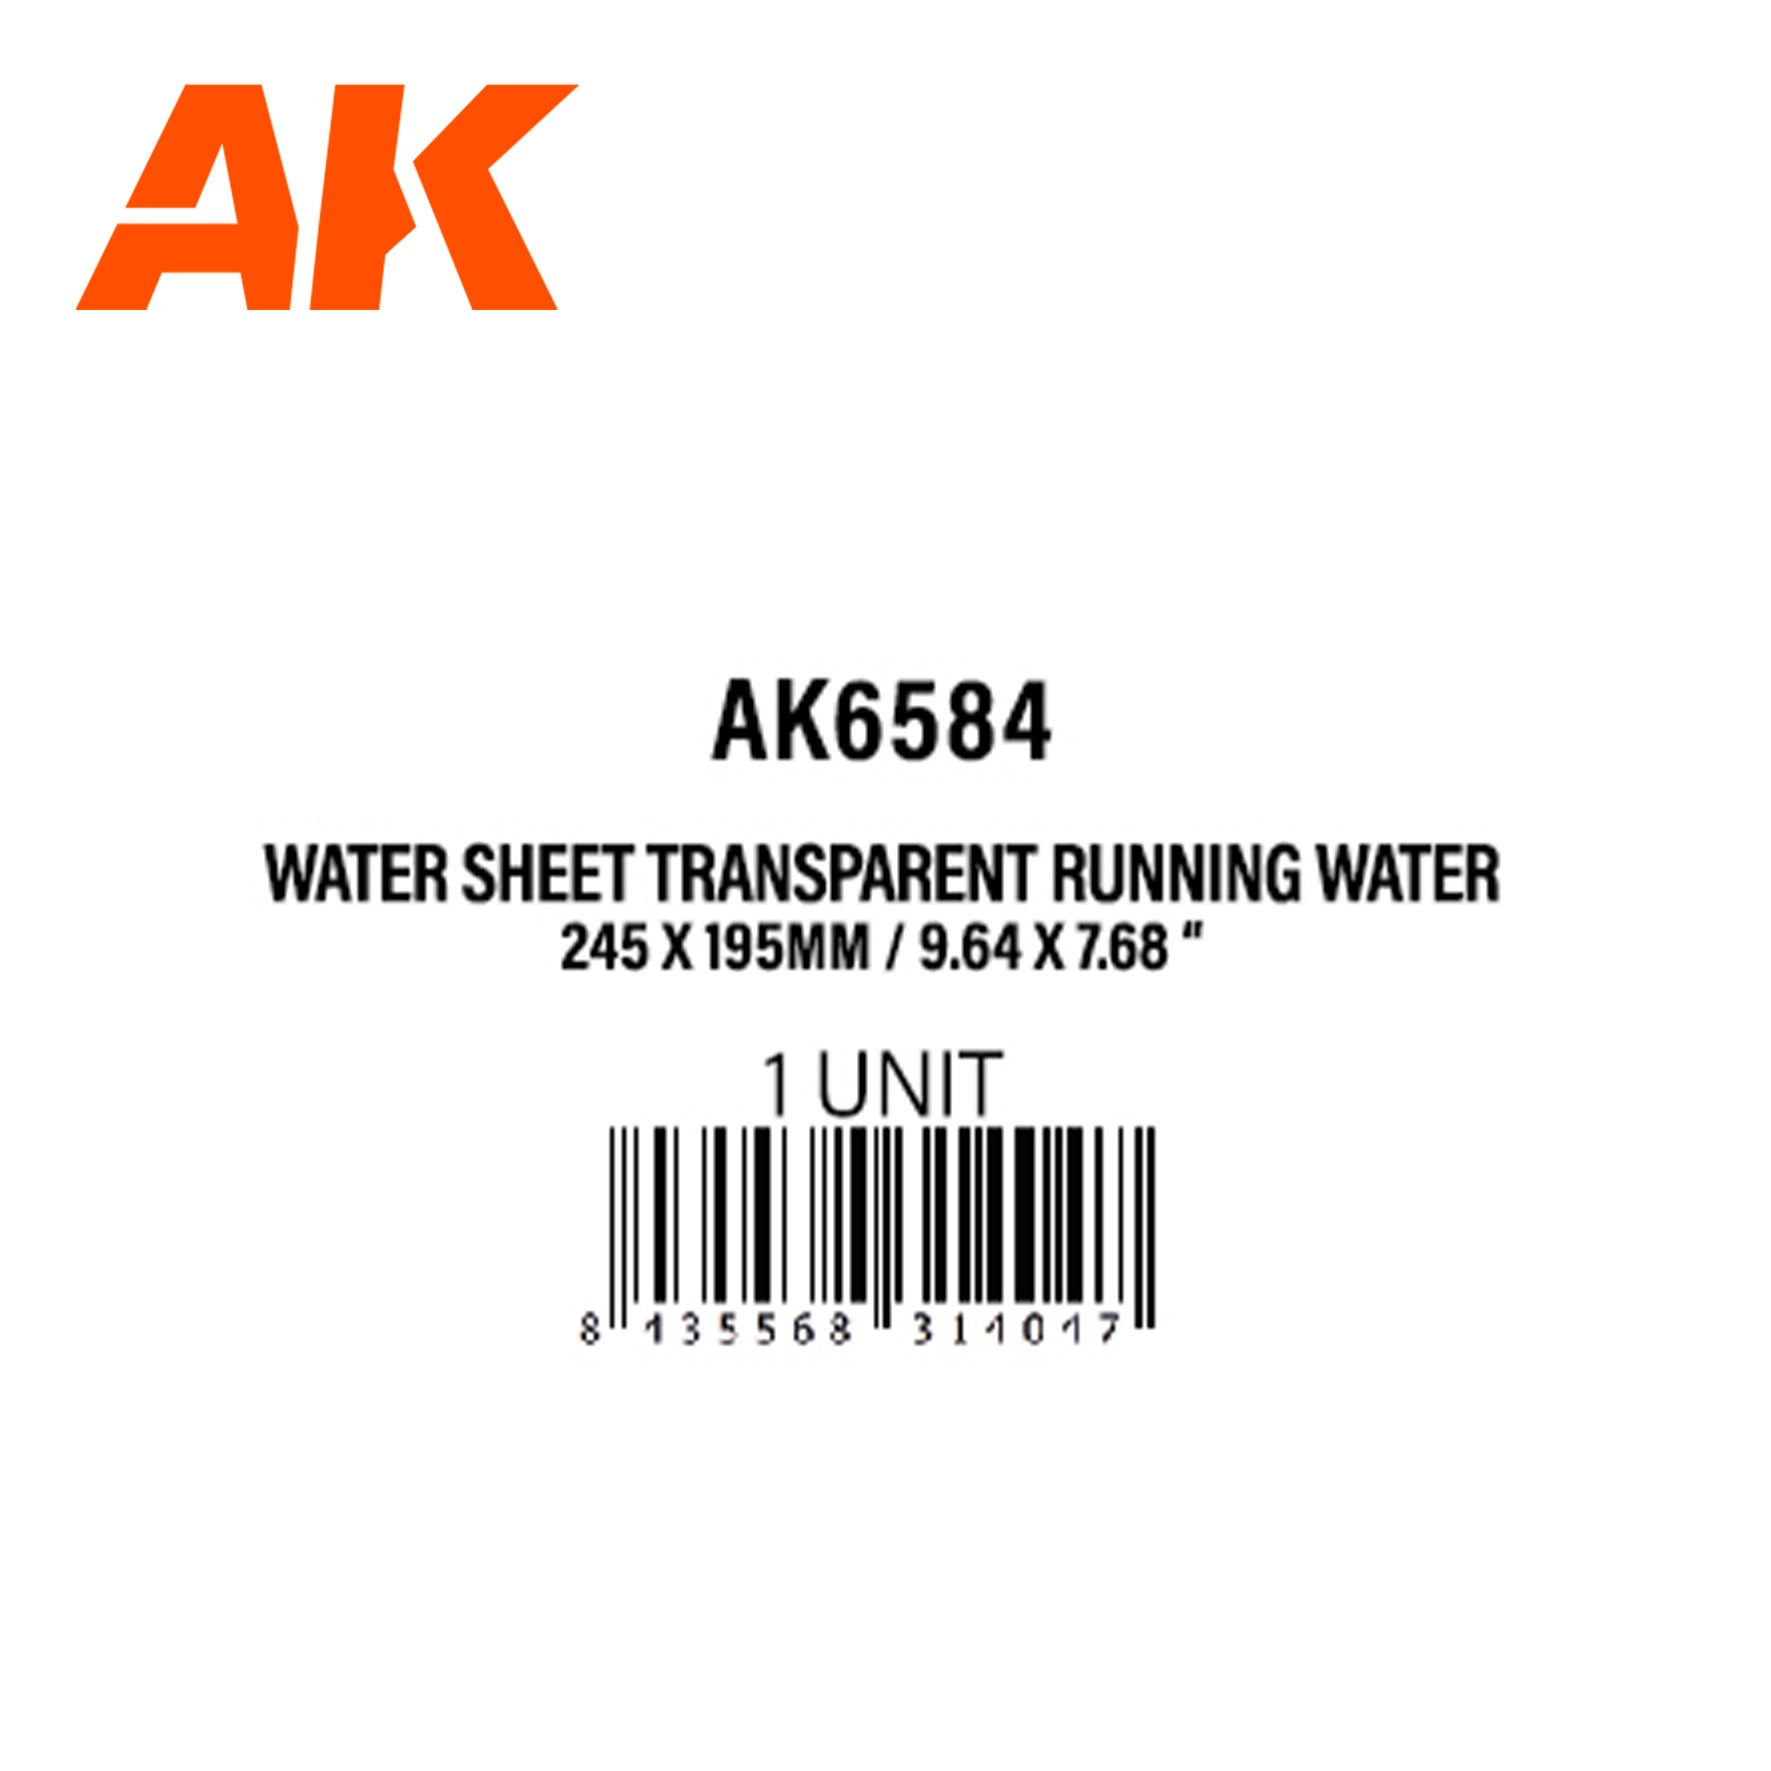 AK6584 - Water Sheet Transparent RUNNING WATER - 245 x 195mm